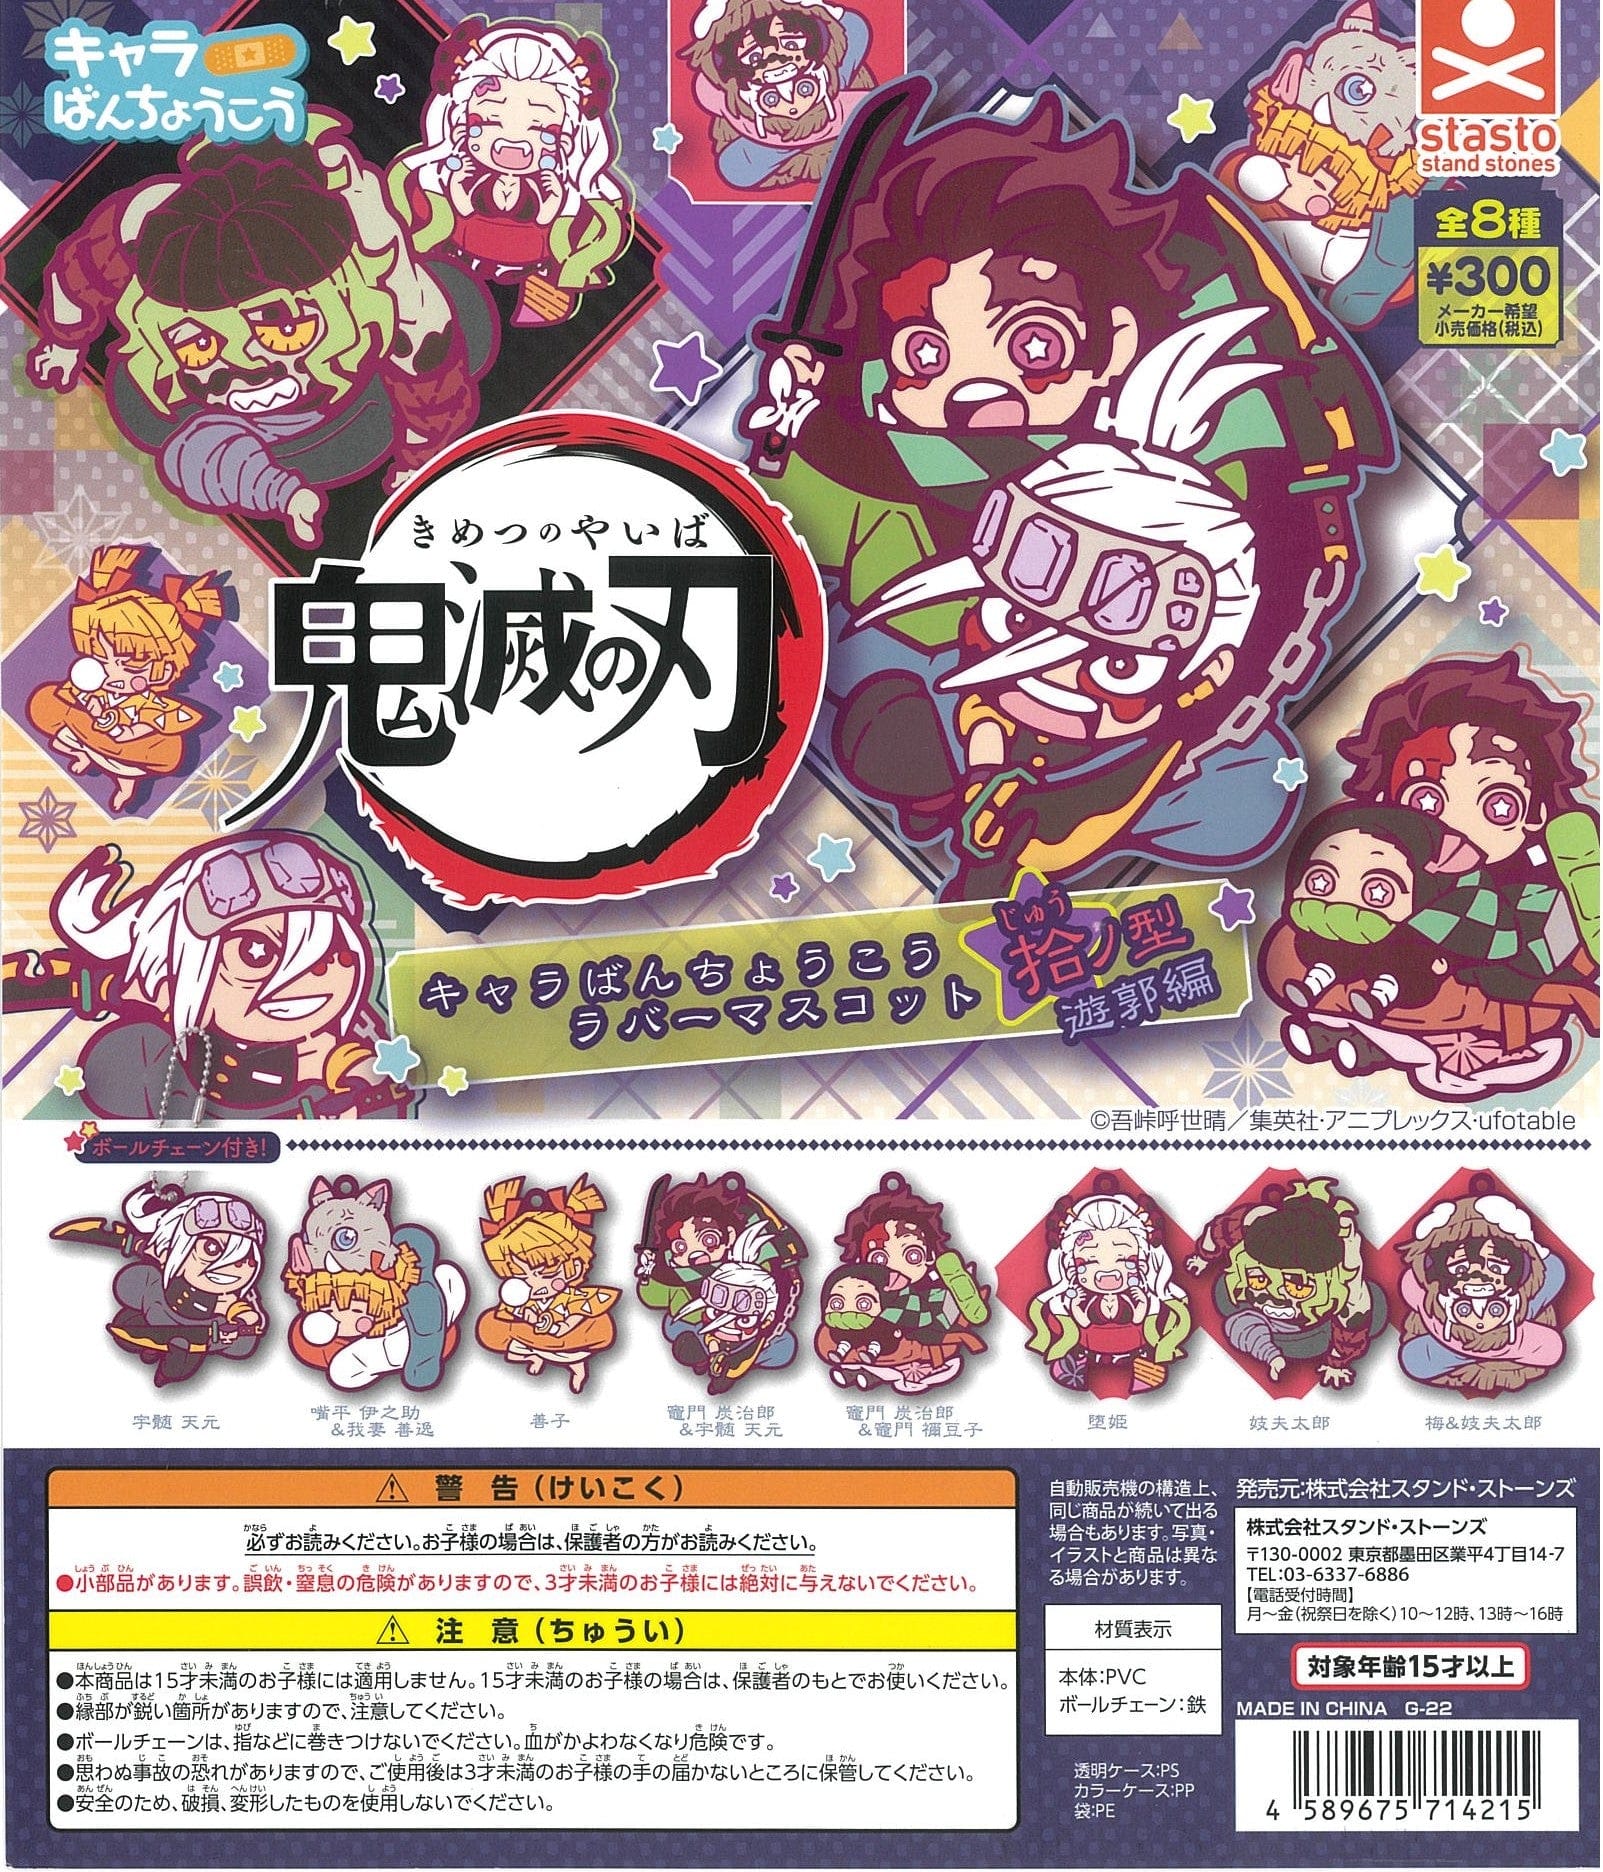 Stasto Stand Stone CP1711 Demon Slayer Chara Bandage Rubber Mascot Tenth Form Vol. 10 Yukaku Ver.